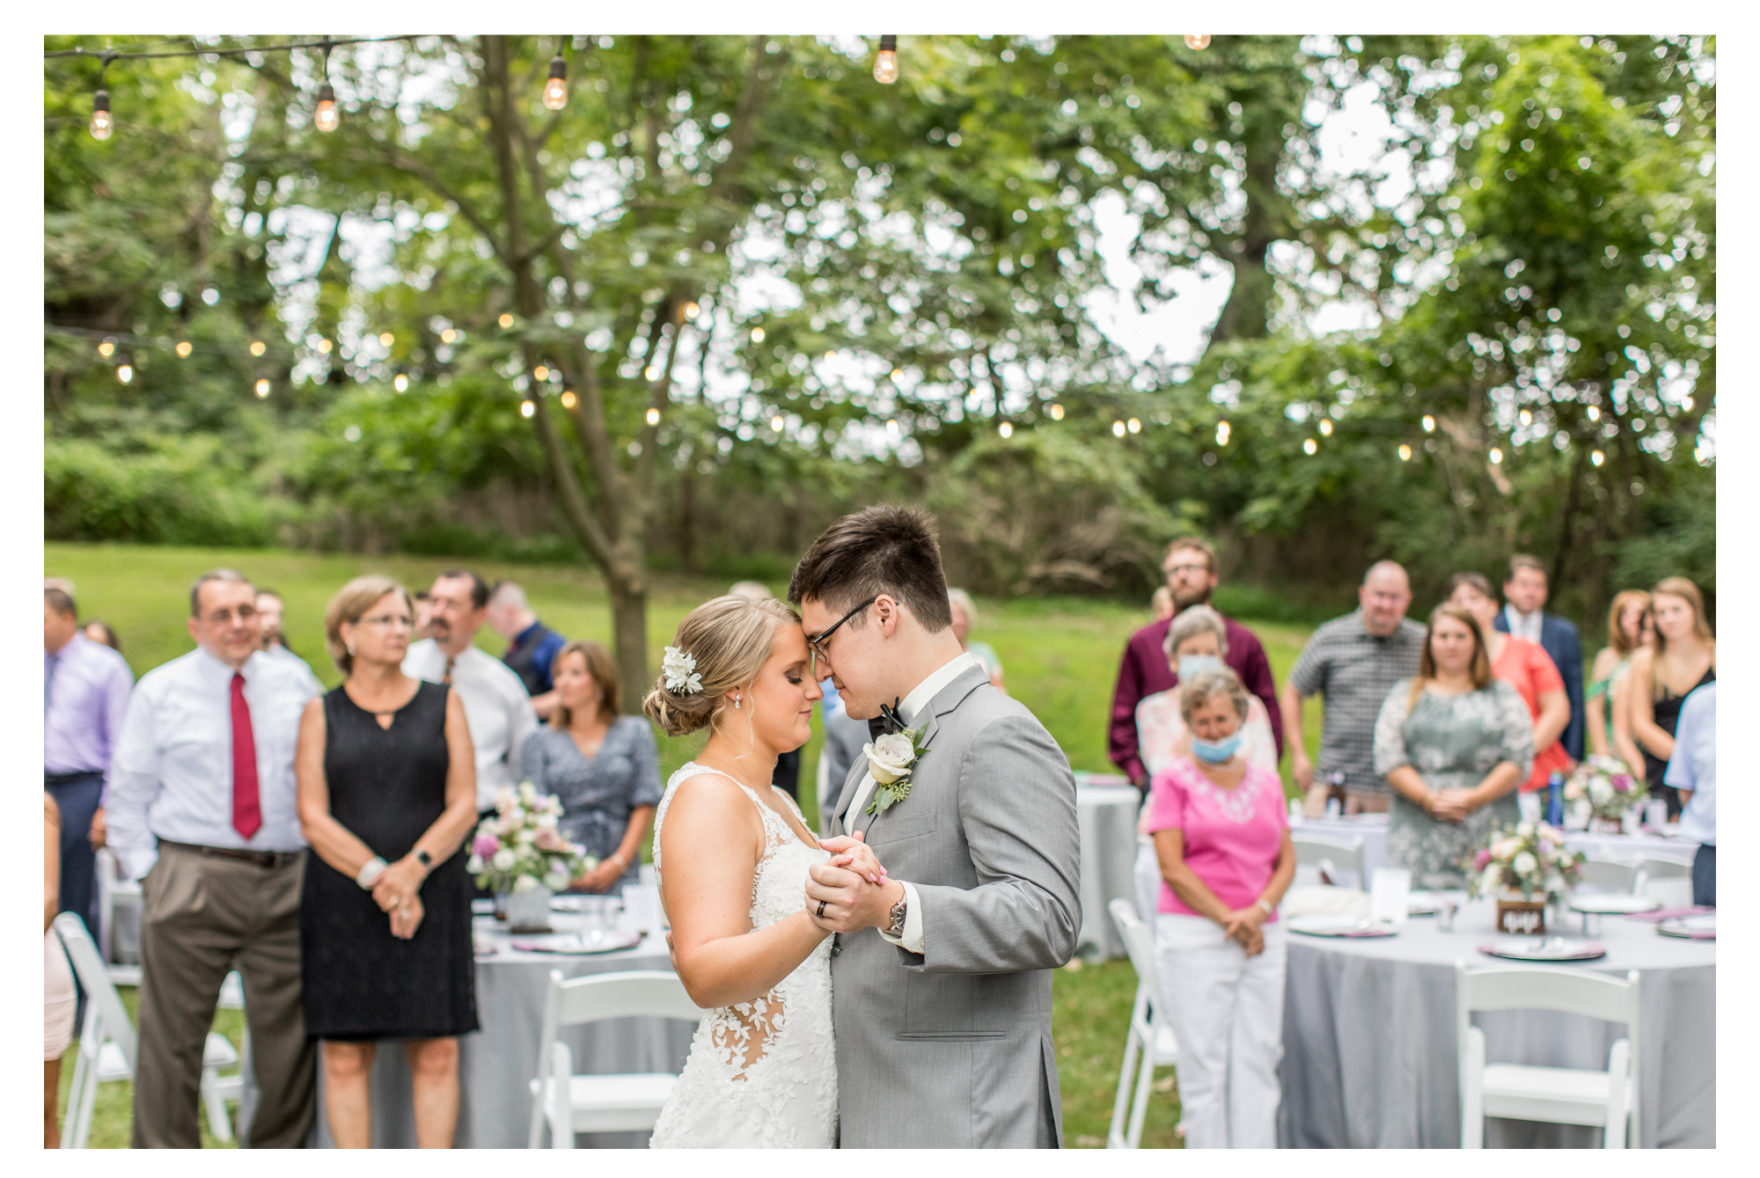 Summer wedding. Seasons at Magnolia Manor. 2020 Wedding. Covid wedding. Purple wedding. Ukulele. Outdoor reception. Bistro lights reception. 